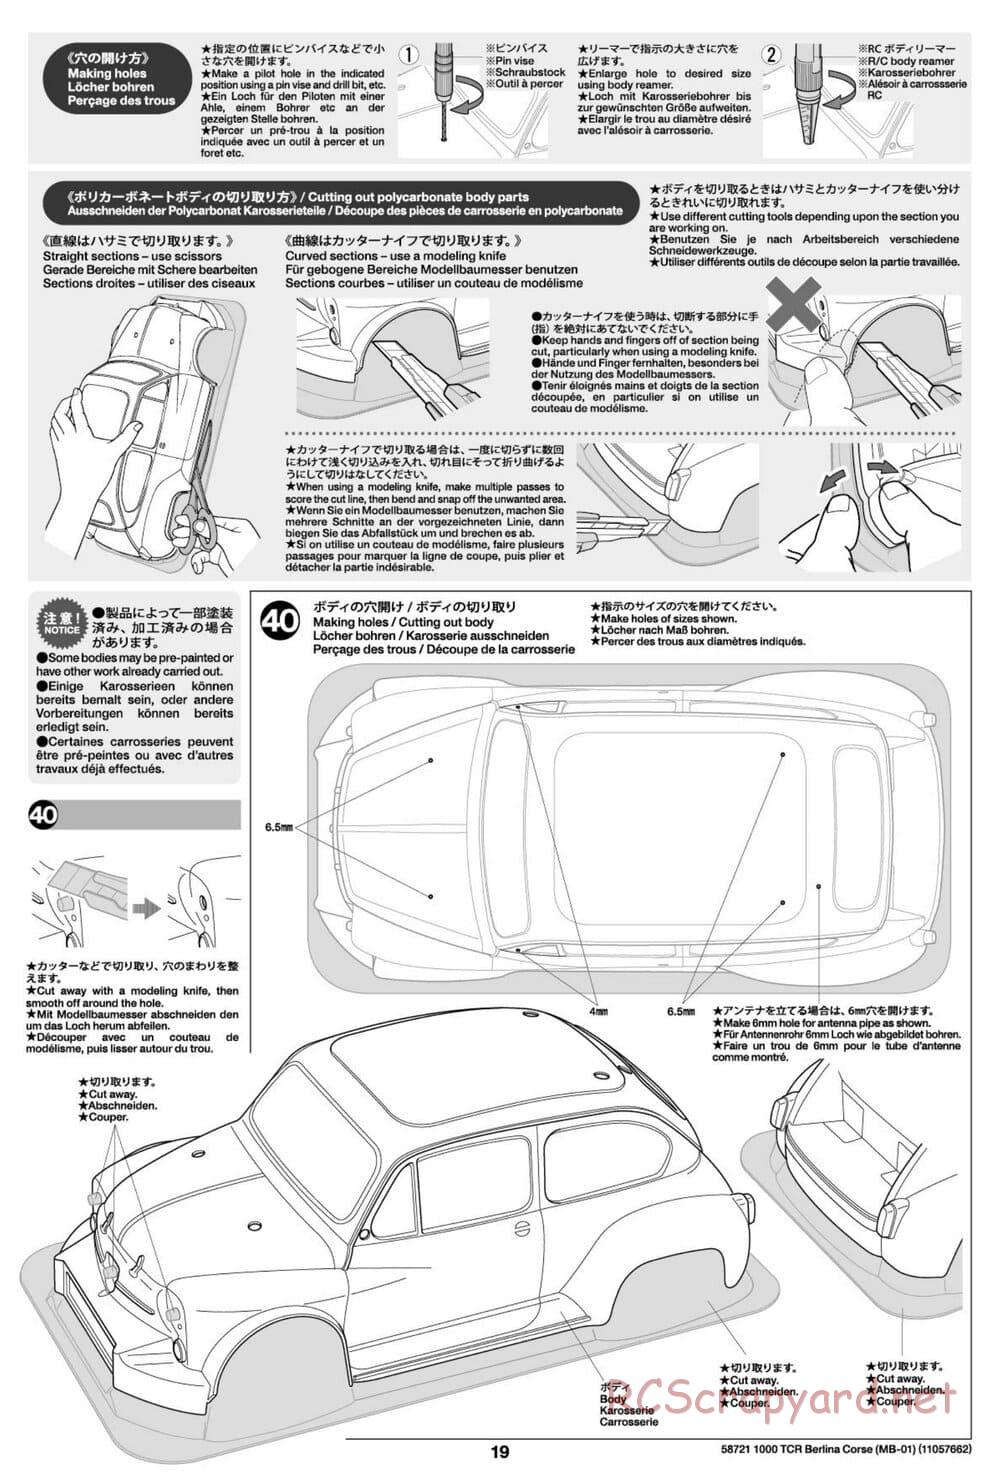 Tamiya - Fiat Abarth 1000 TCR Berlina Corsa - MB-01 Chassis - Manual - Page 19